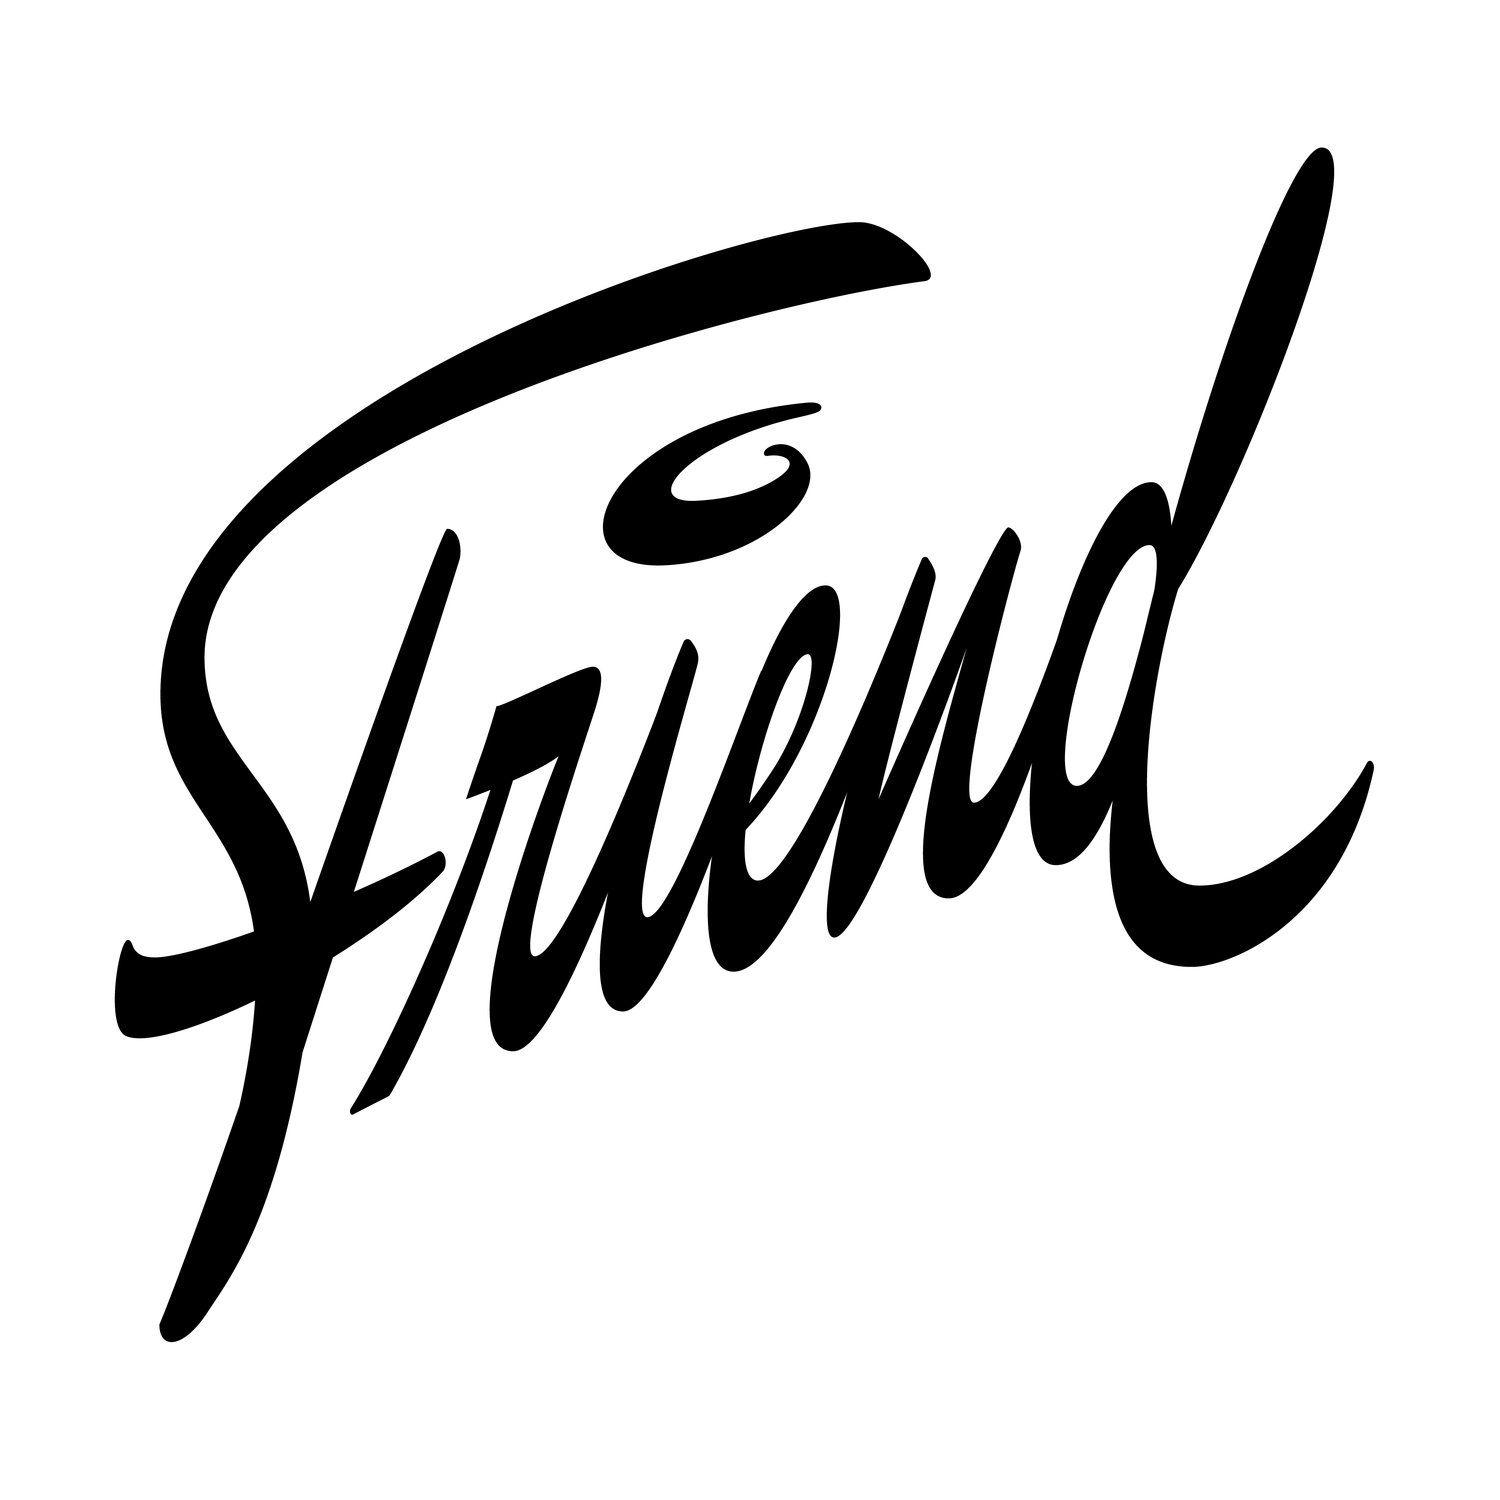 Friend Black and White Logo - The Design Studio of Jeremy Friend